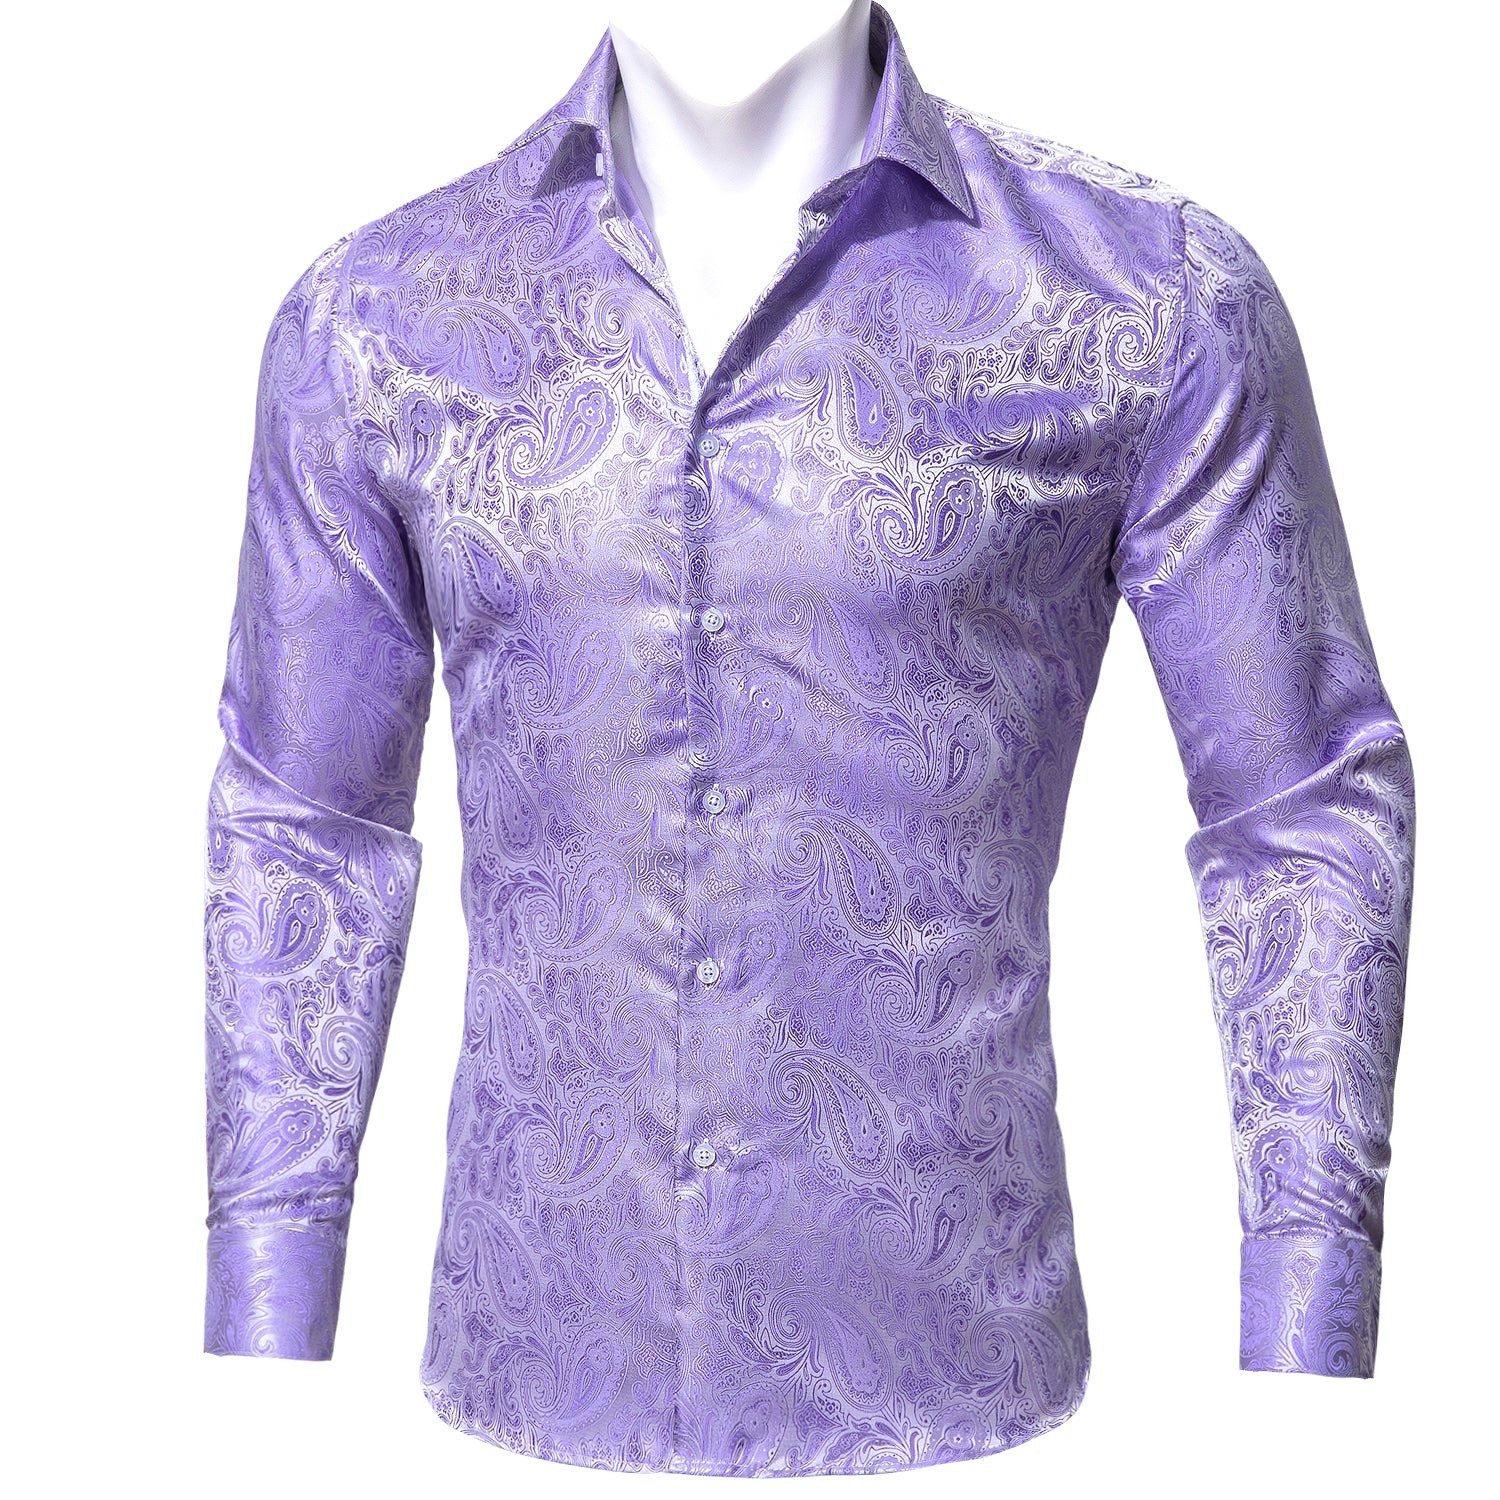 Barry.wang Button Down Shirt  Purple Paisley Silk Men's Shirt